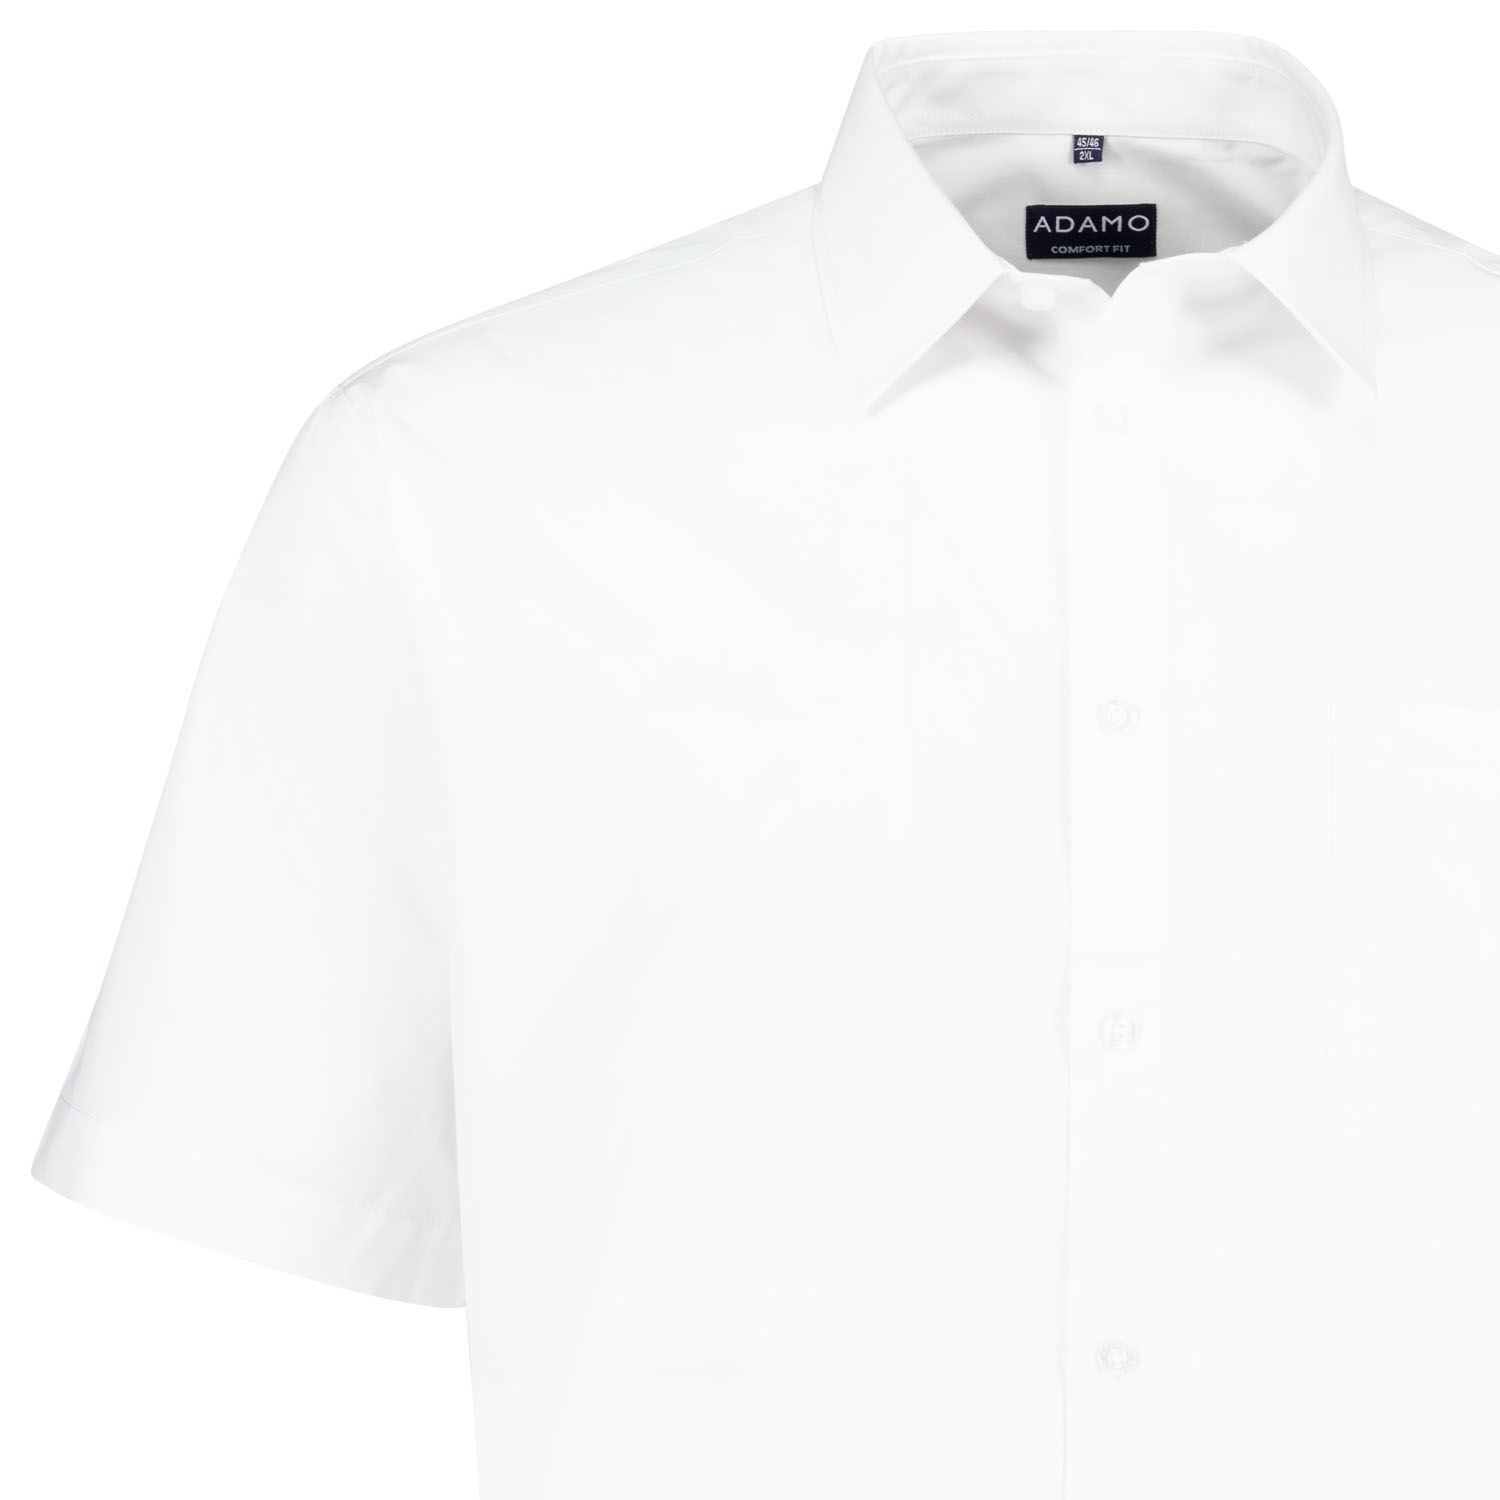 Men's Business Shirt Short-Sleeved white Comfort Fit series Warren by ADAMO up to oversize 10XL